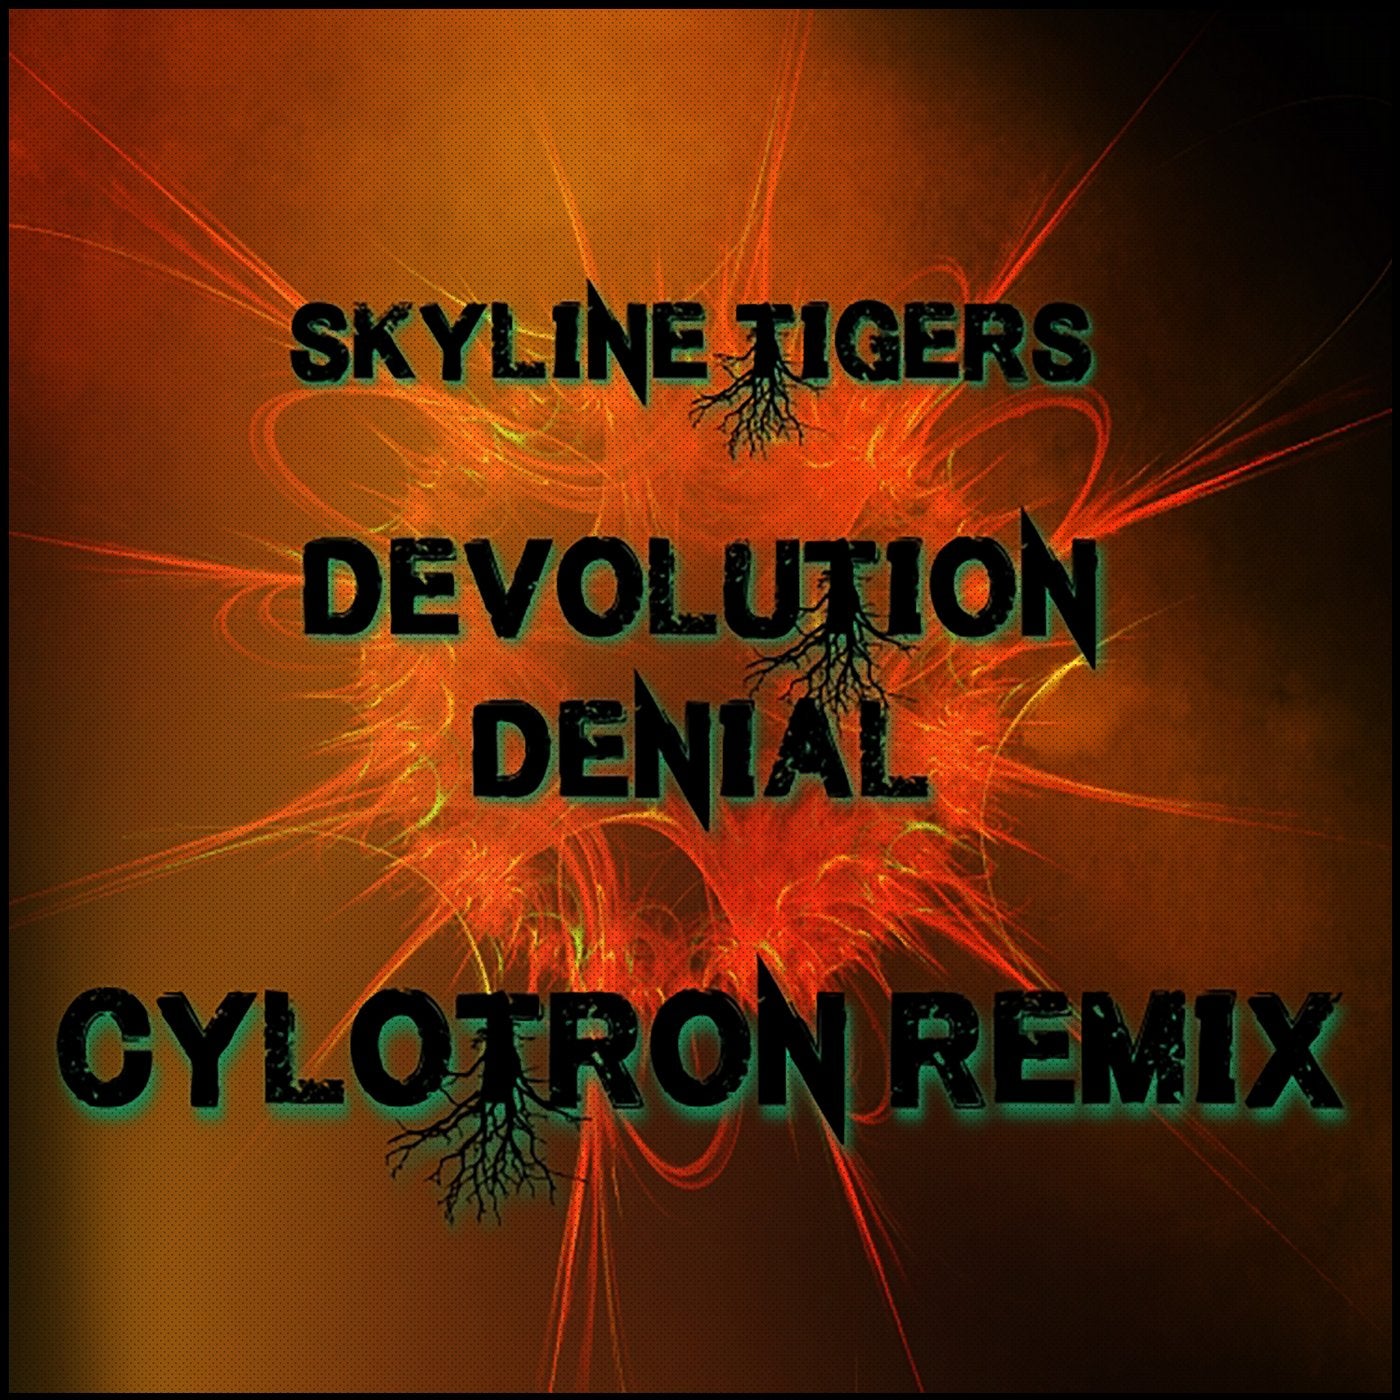 Devolution Chapter 1 Denial (feat. Skyline Tigers) [Cylotron Remix]